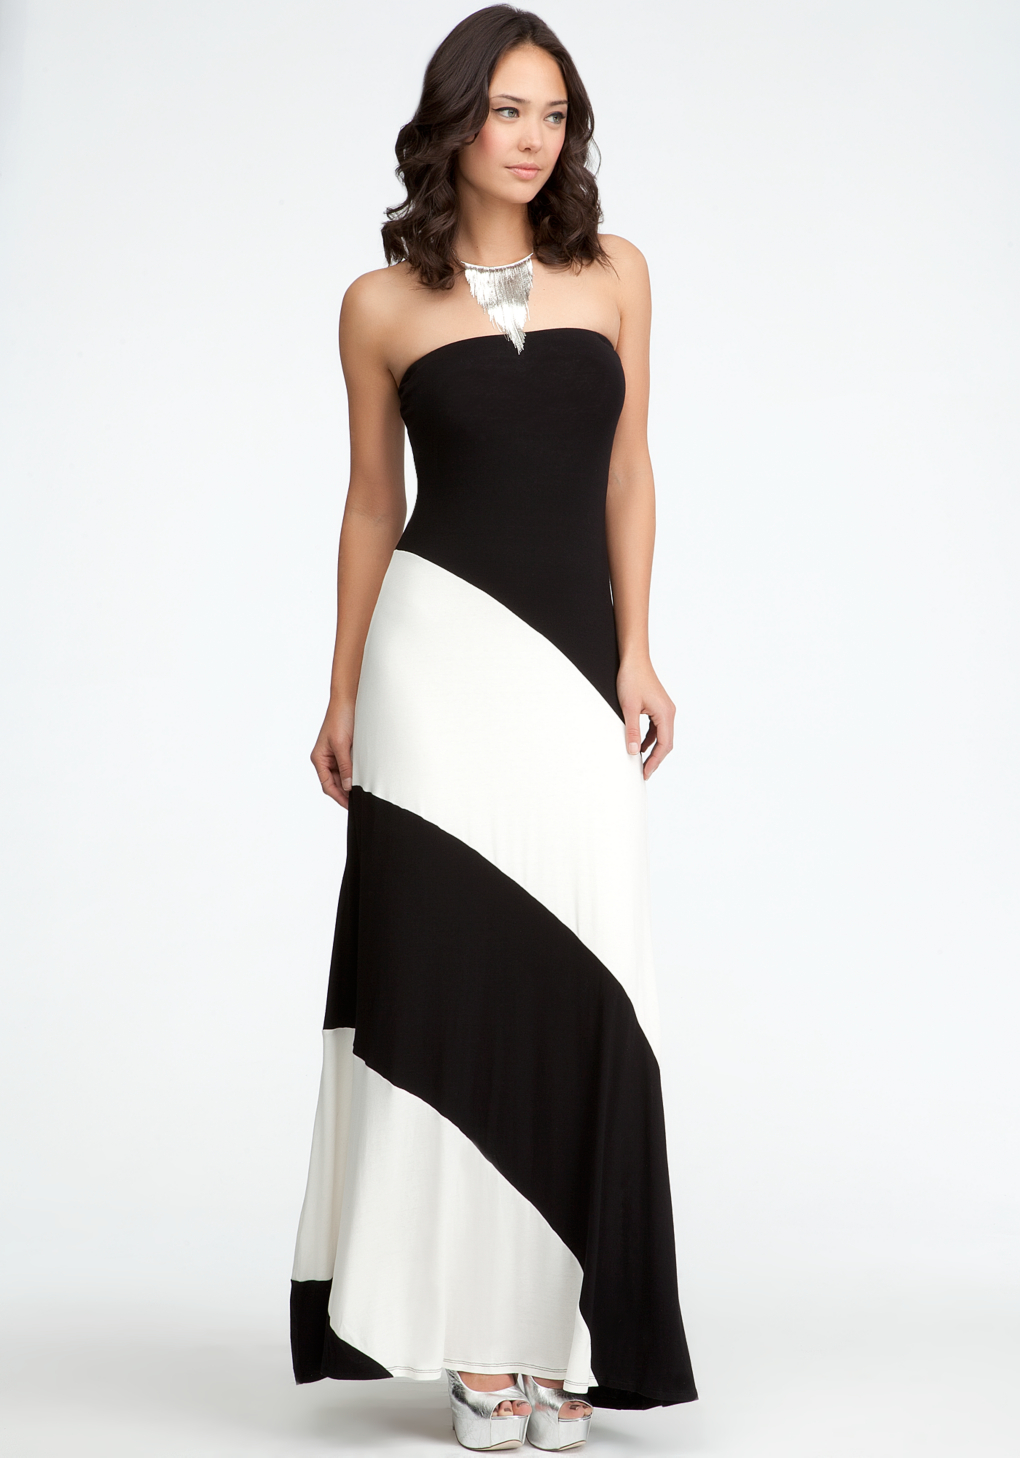 Lyst - Bebe Colorblock Strapless Maxi Dress in Black